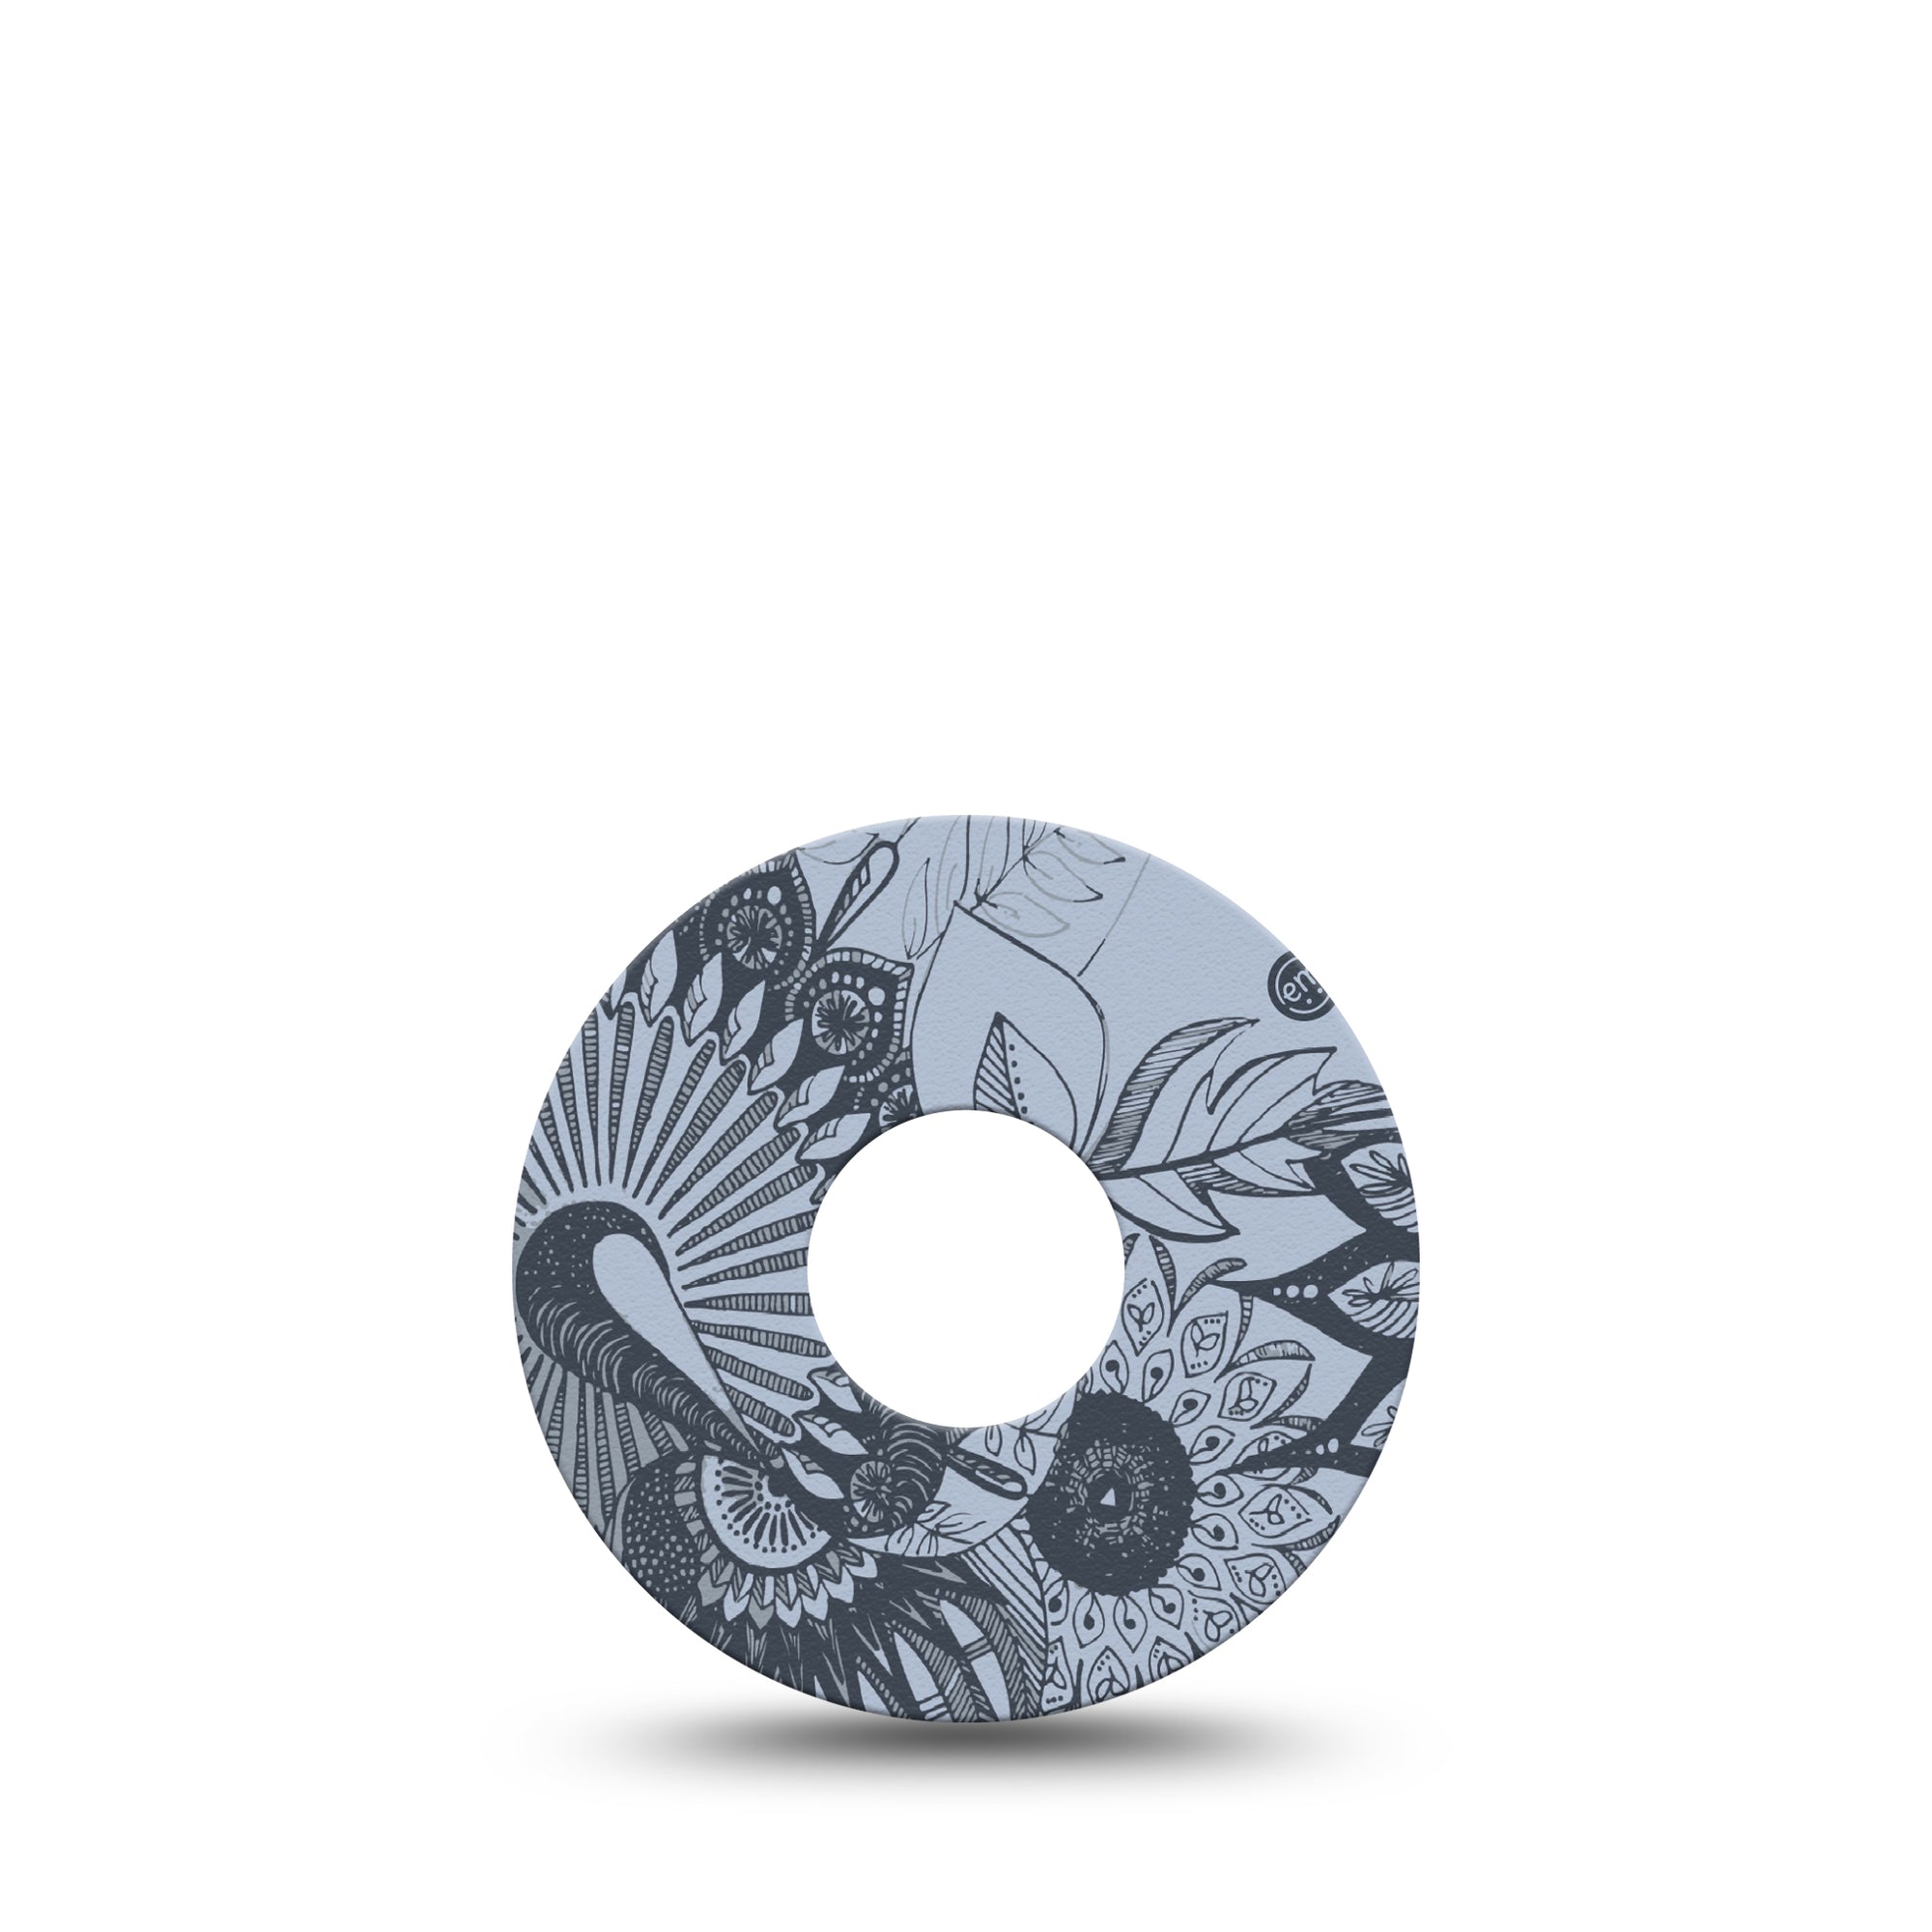 Dani Libre 3 Tape, Single, Floral Line Art Themed, CGM Fixing Ring Tape Design